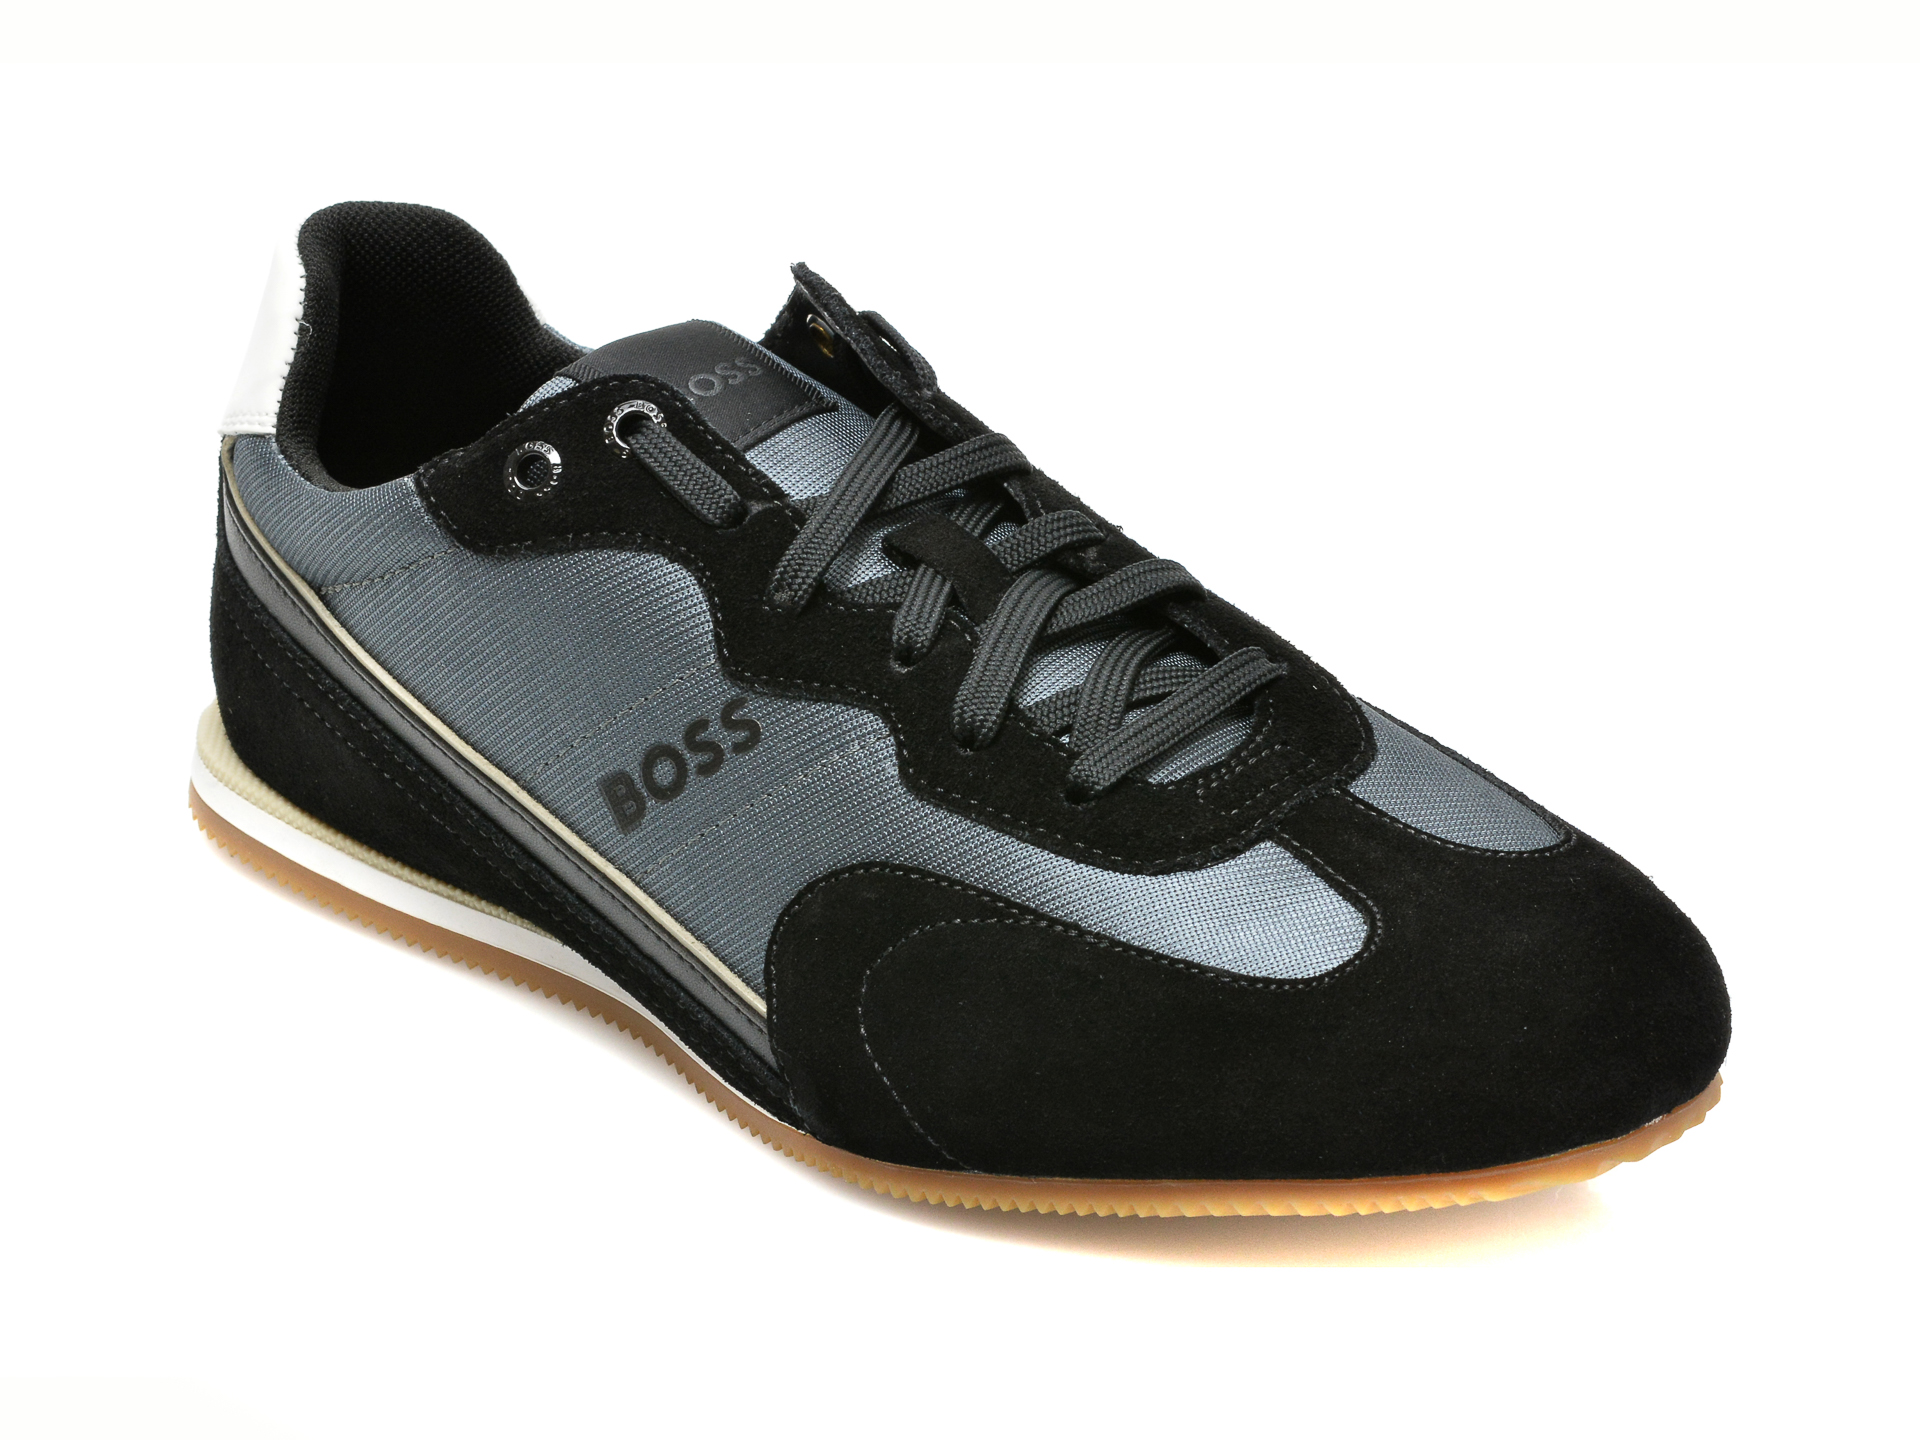 Pantofi sport HUGO BOSS negri, 4551, din material textil si piele ecologica Hugo Boss